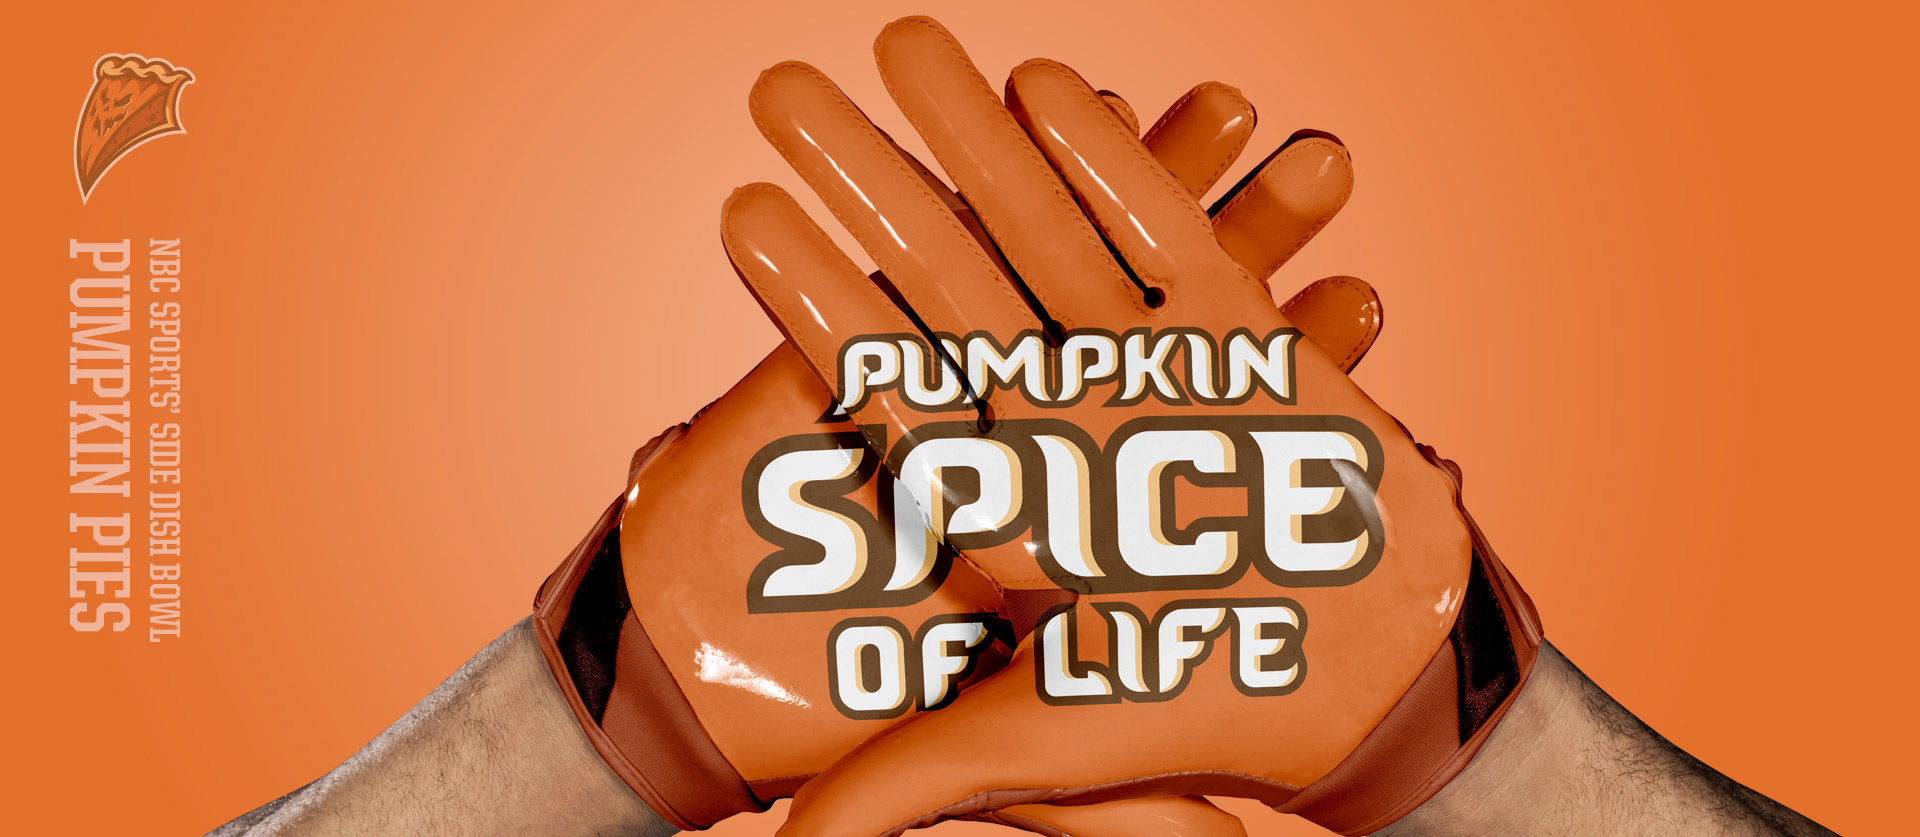 Pumpkin Pies Gloves - Football Uniform Design for NBC Sports Thanksgiving Side Dish Bowl